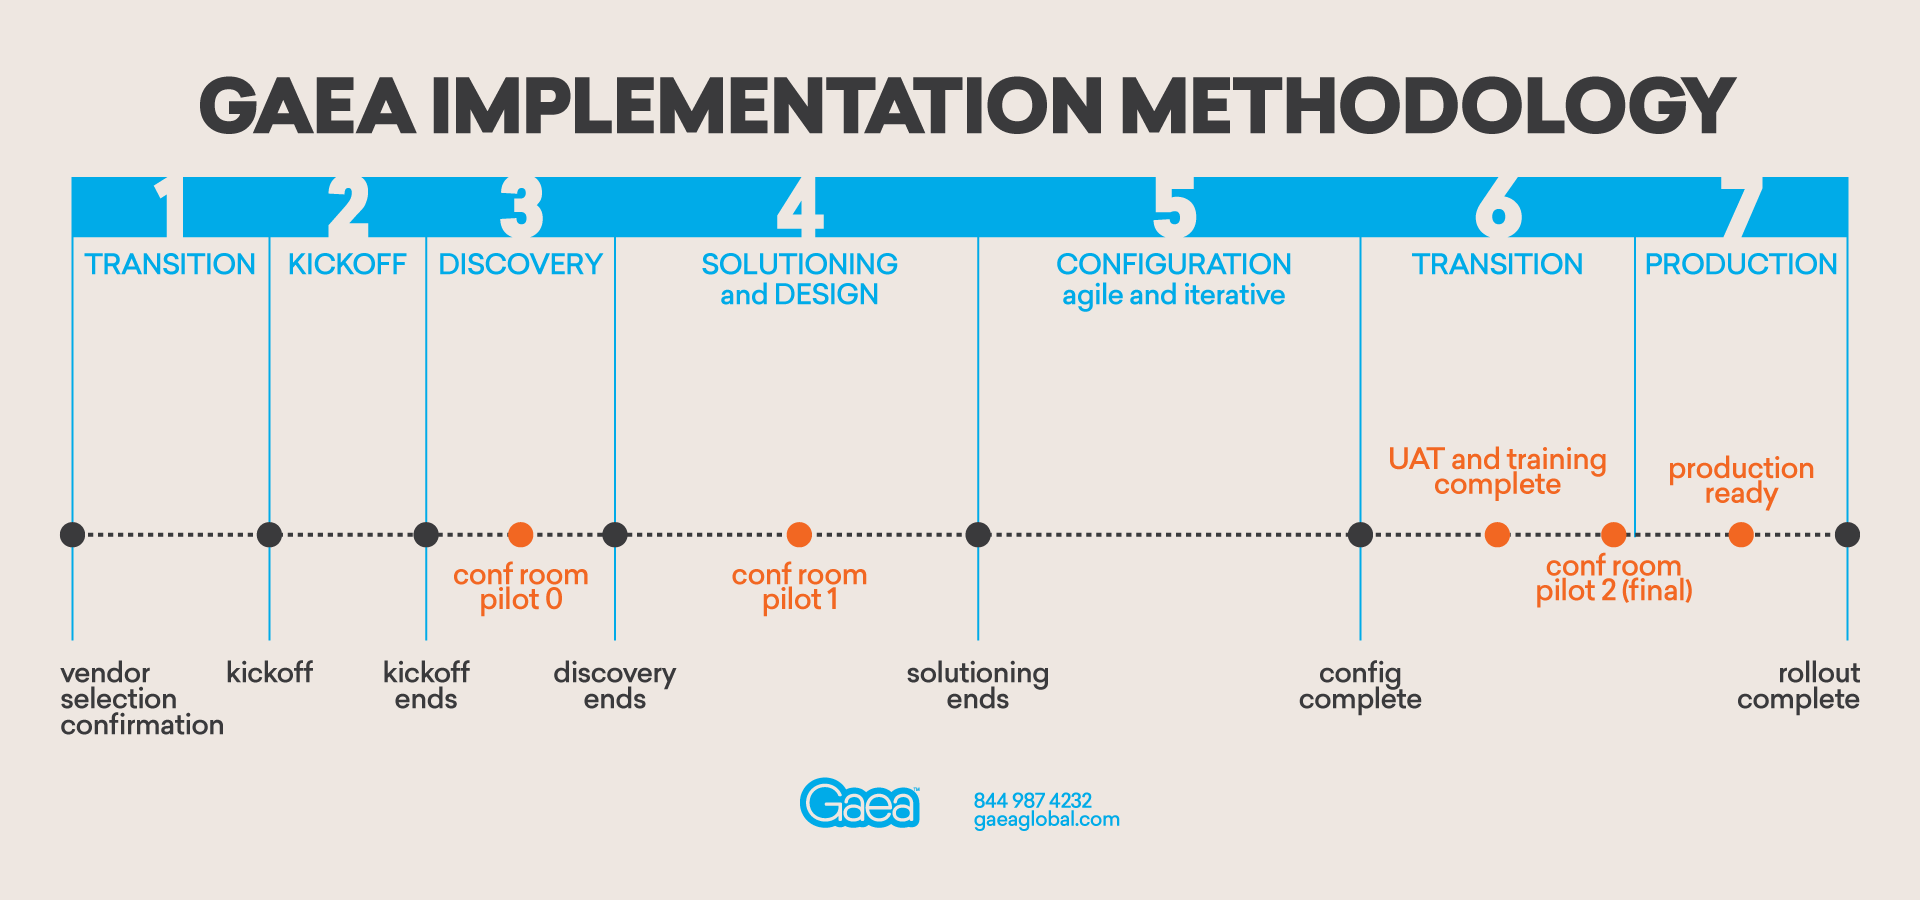 Gaea Implementation Methodology